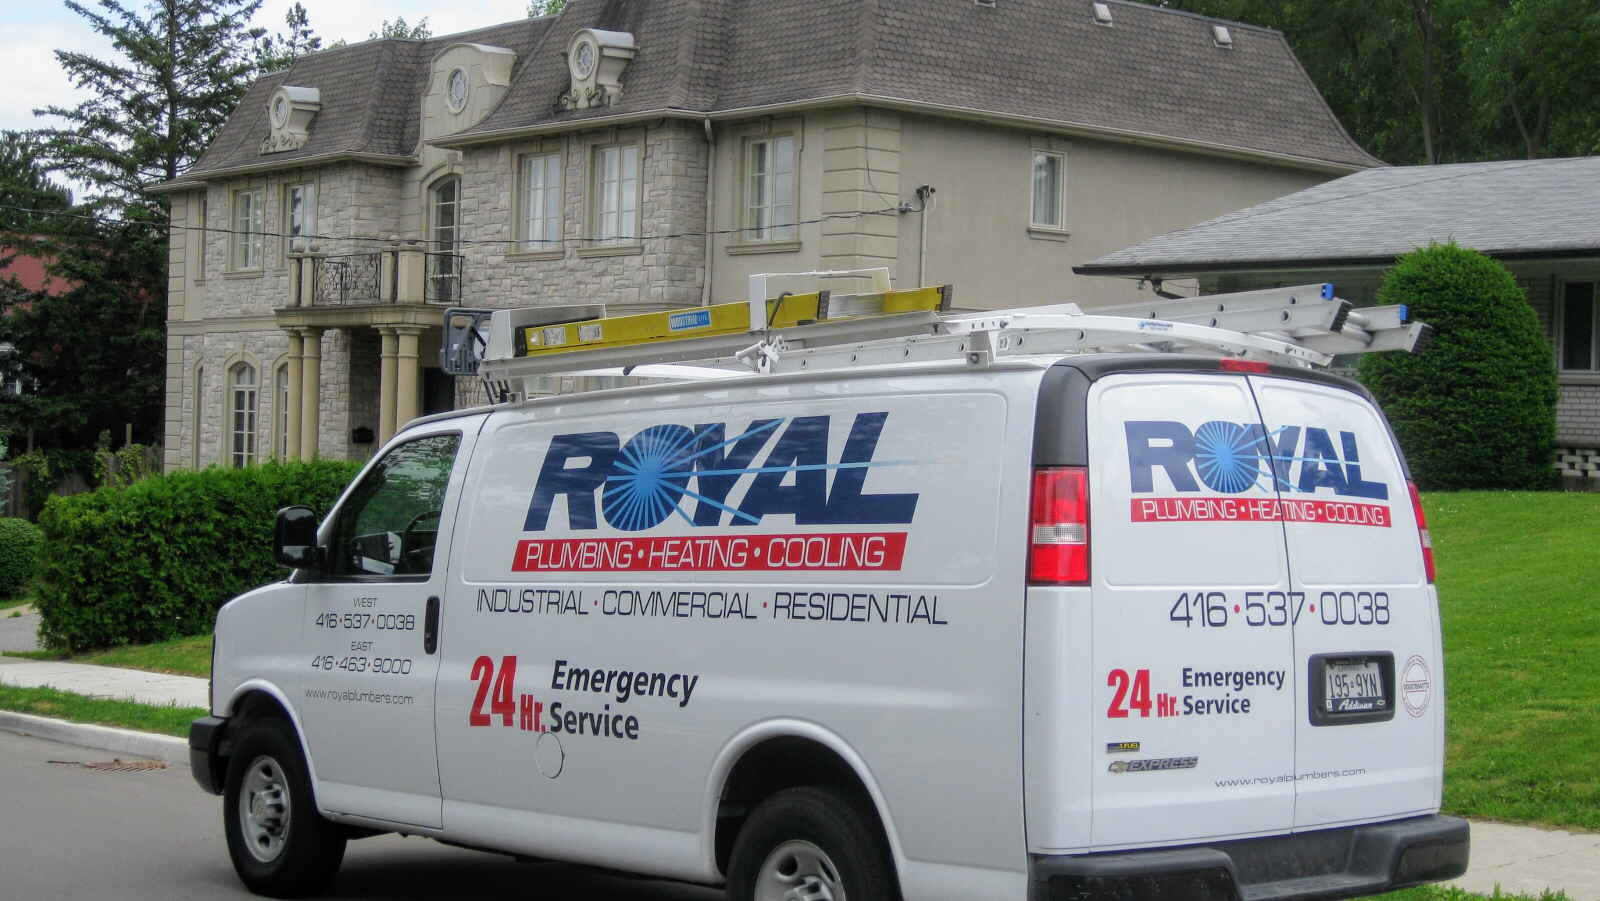 Royal Plumbing Services Ltd.